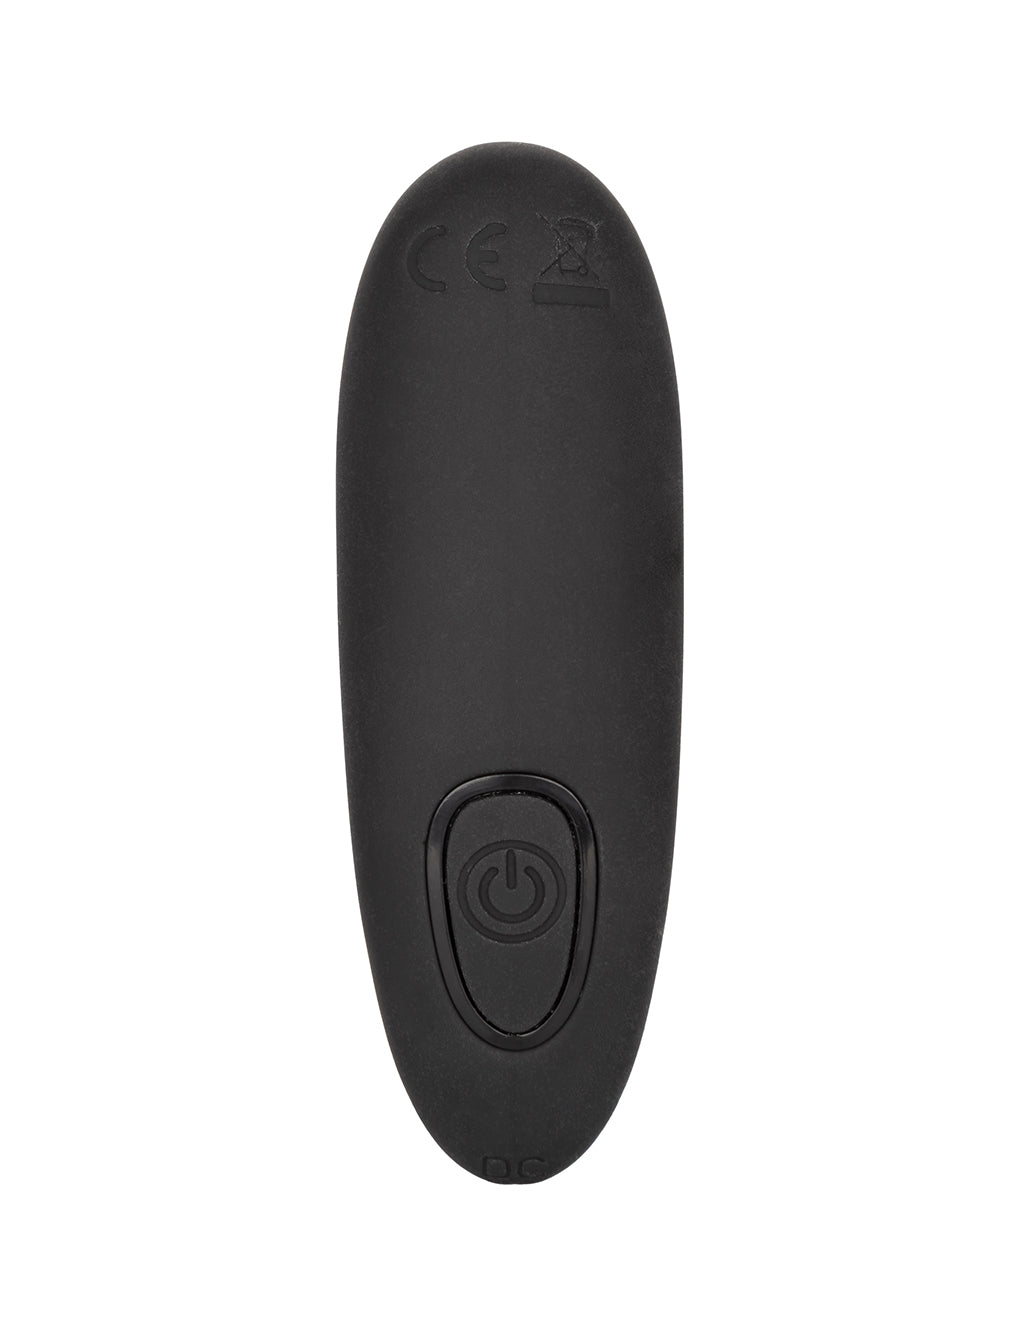 HUSTLER® Playthings Remote Control Thong- Vibrator power button